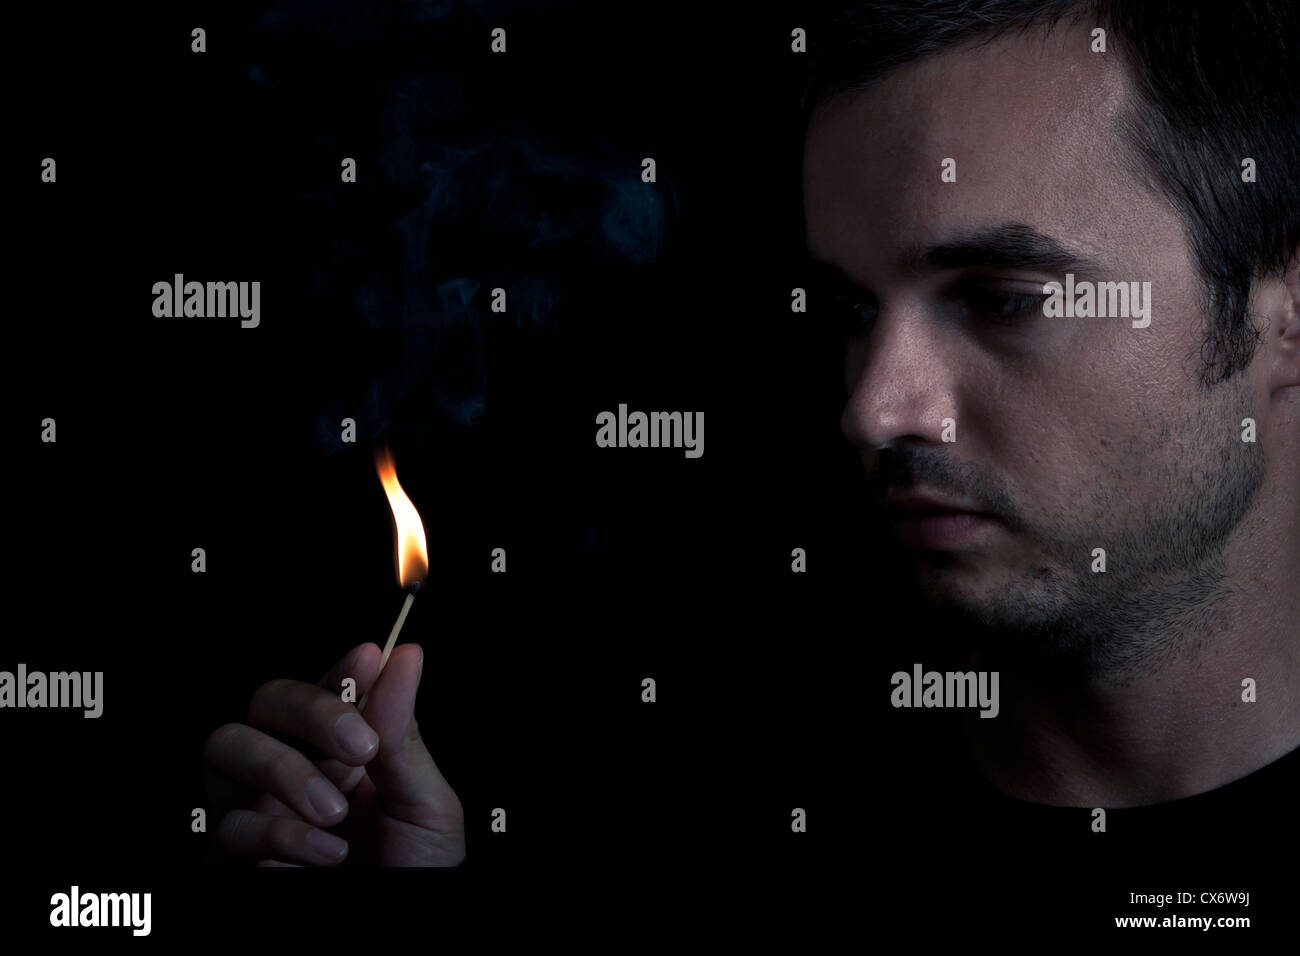 Dramatic portrait of man lighting safety match, over black background. Stock Photo